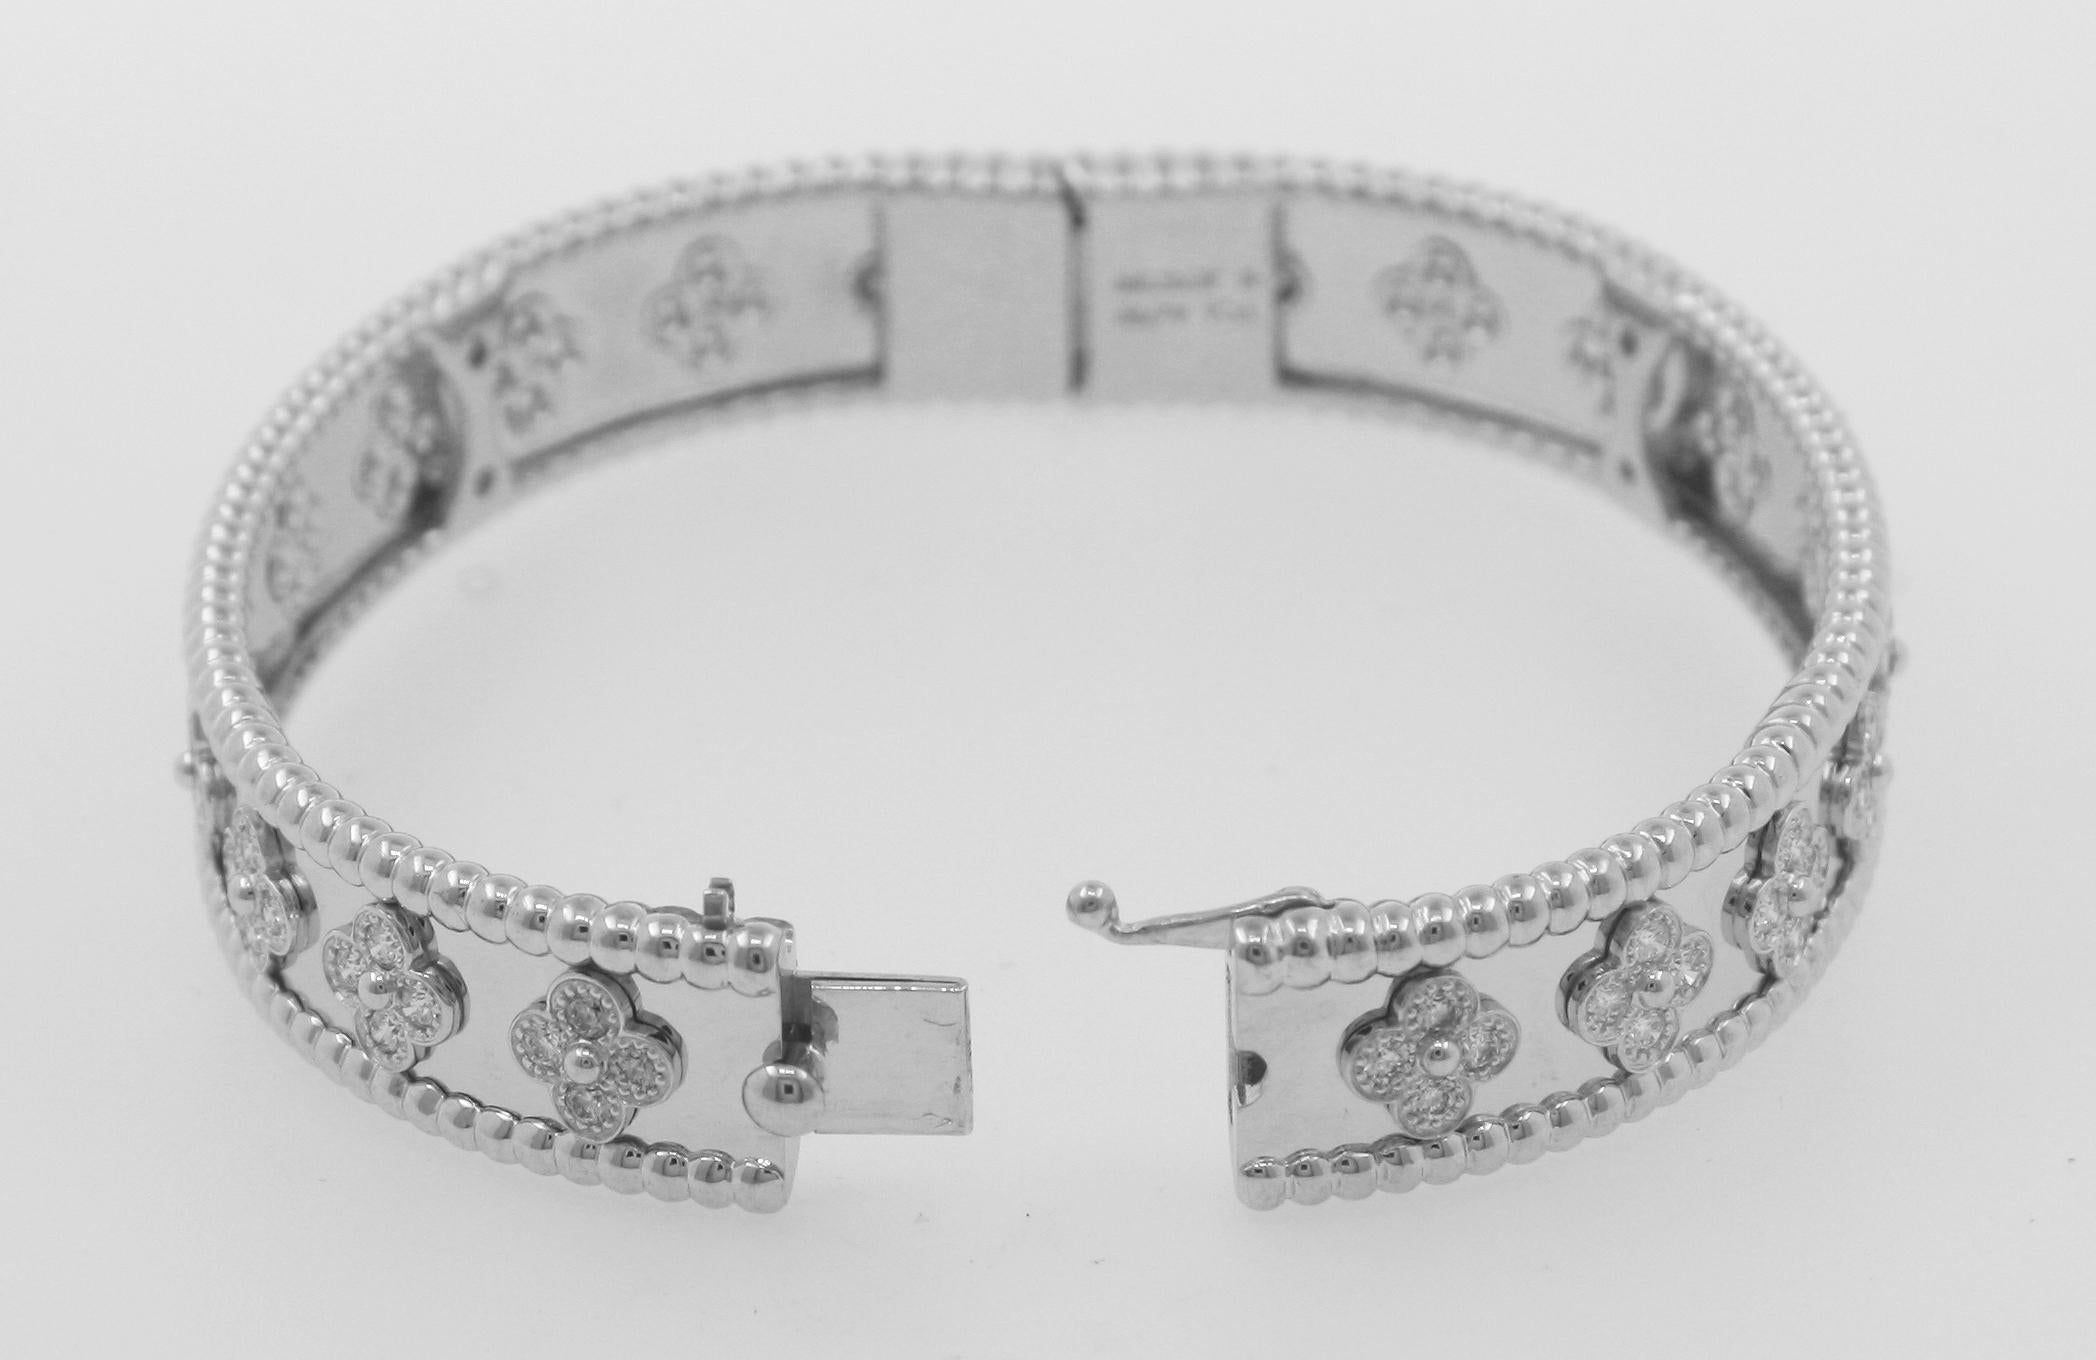 van cleef diamond bracelet price